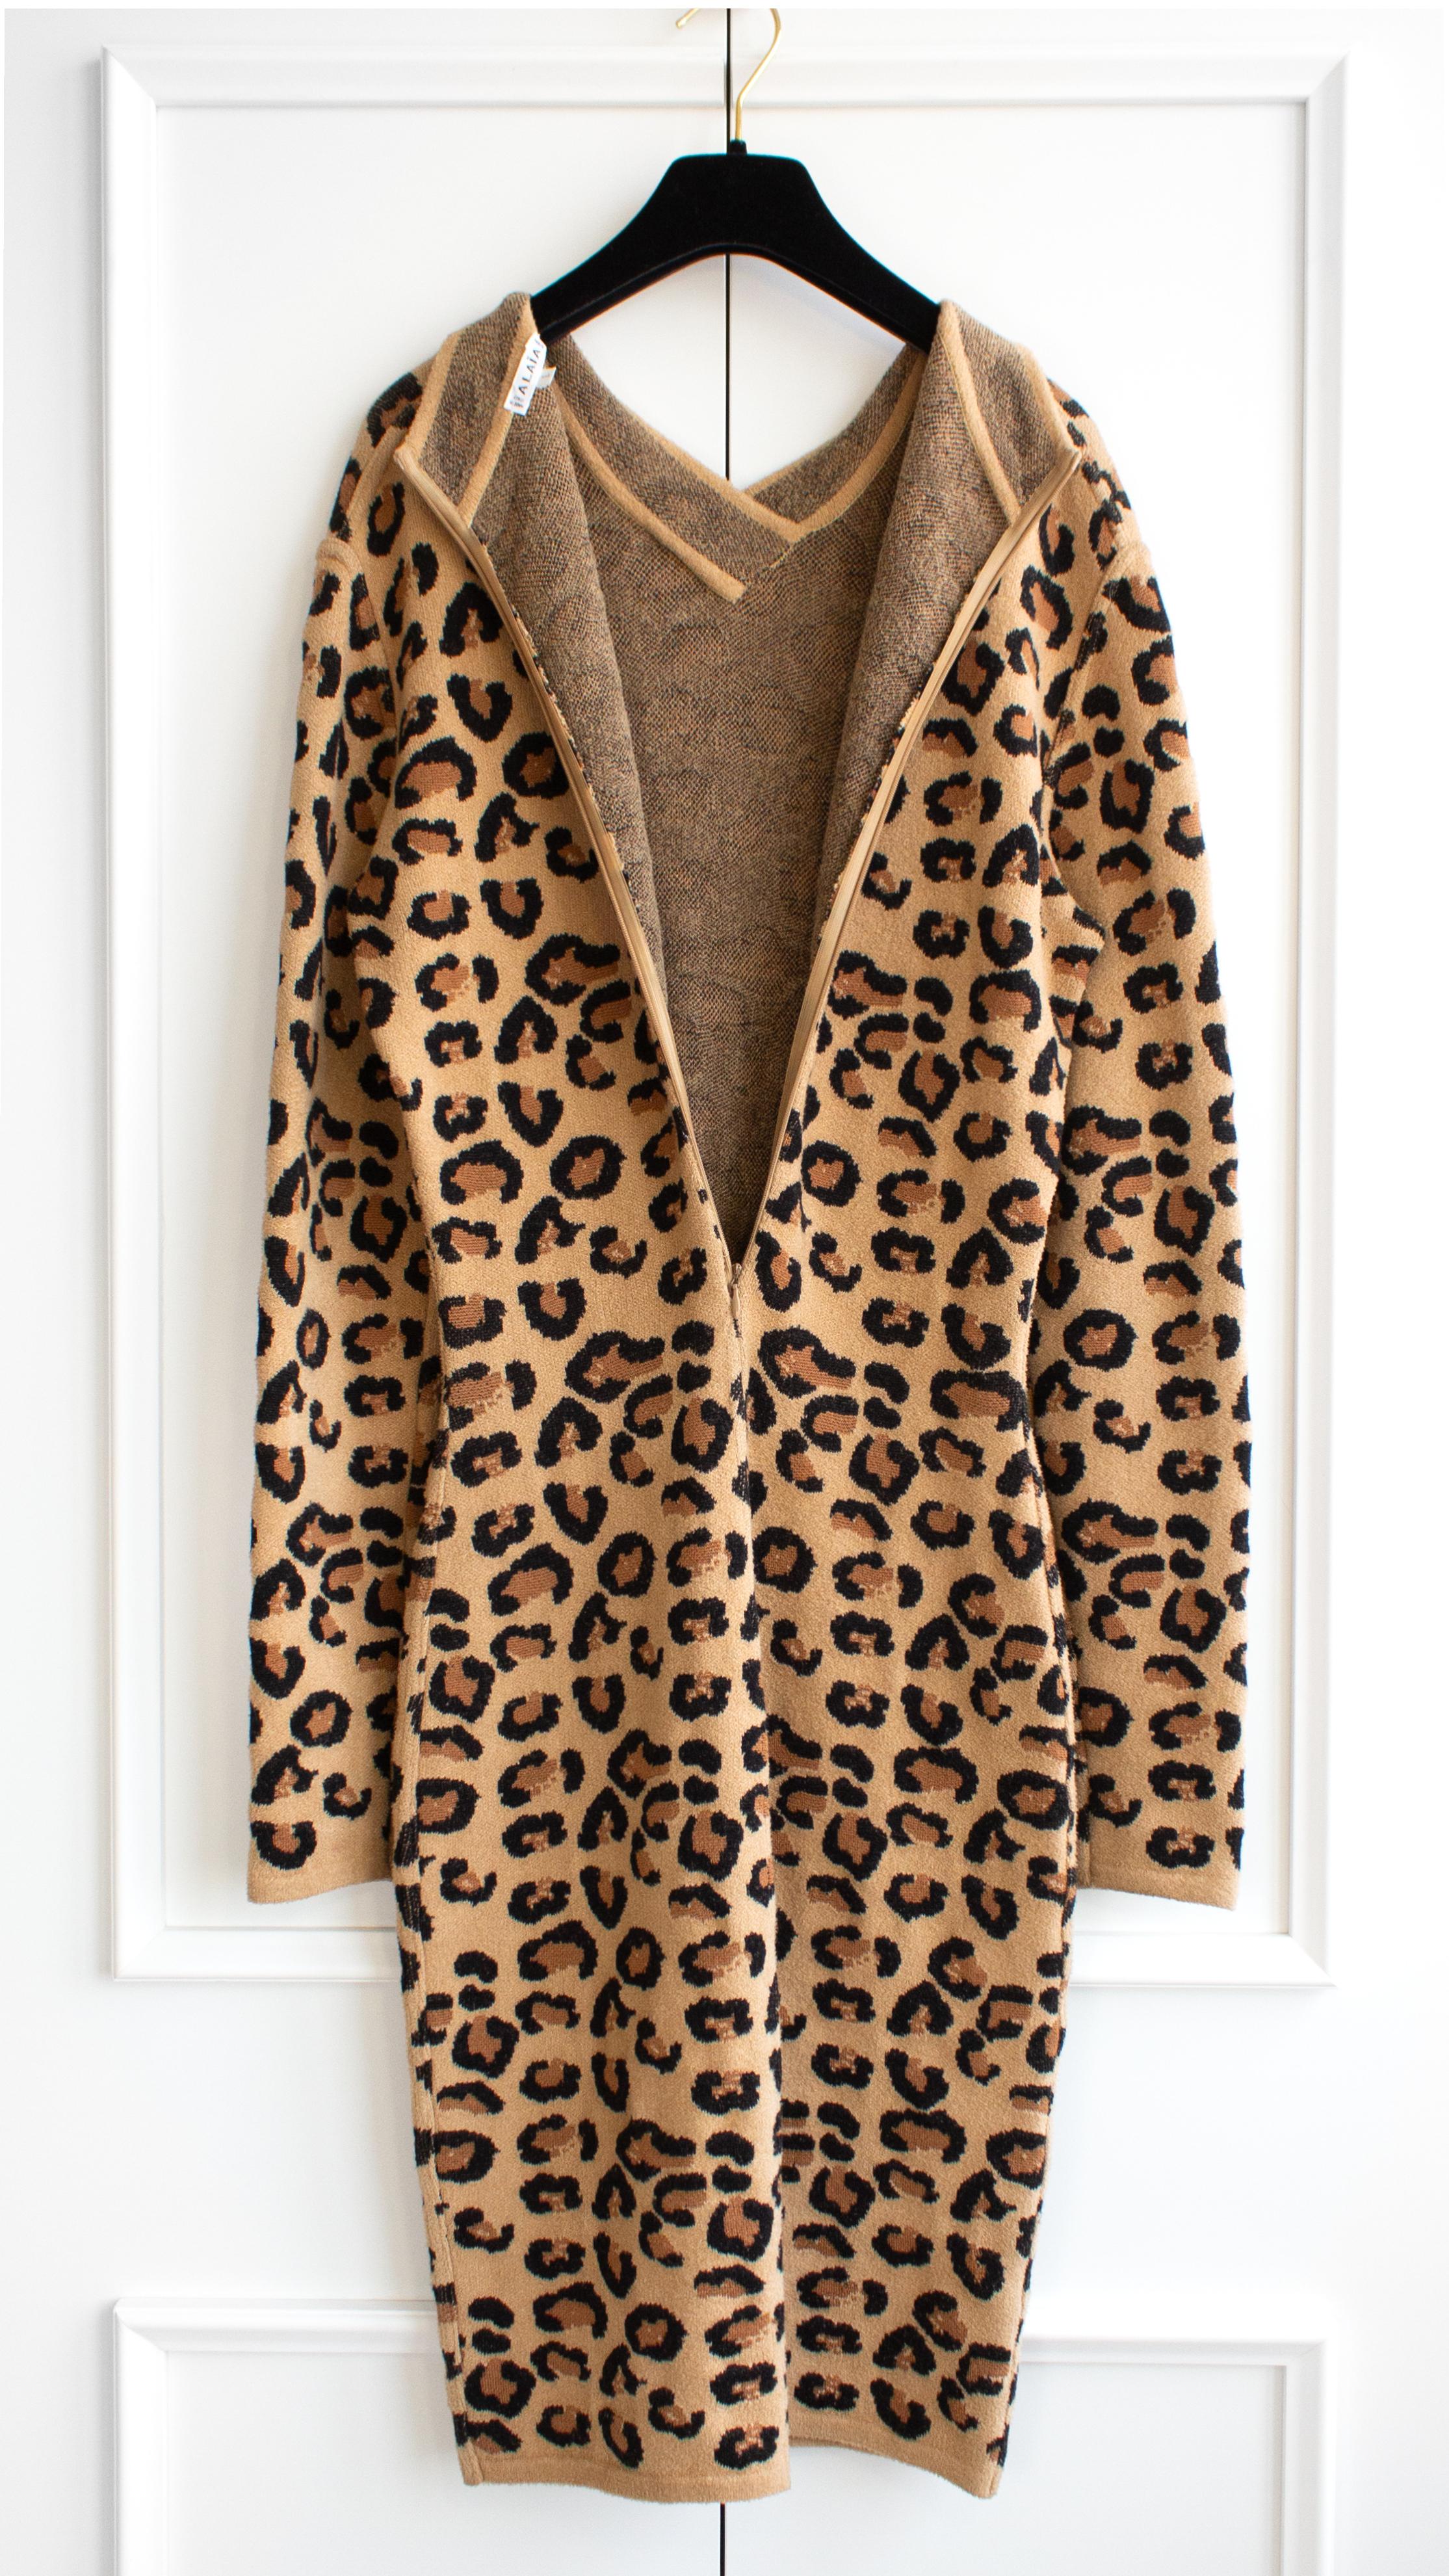 Iconic Alaia Vintage Fall/Winter 1991 Leopard Print Knit Bodycon Dress 14